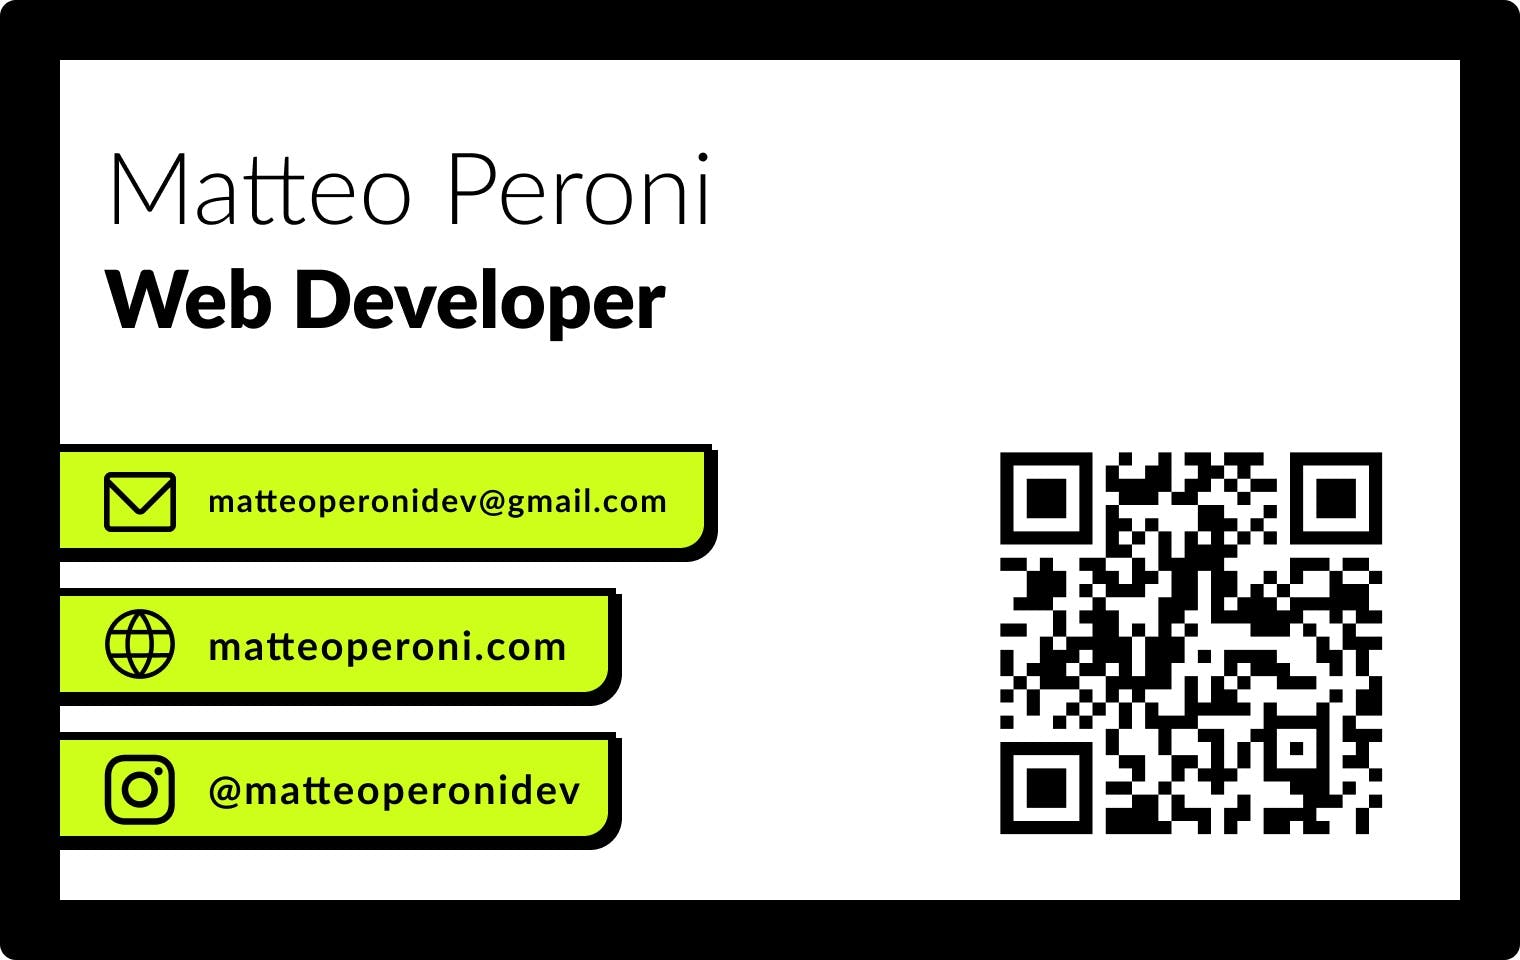 Matteo Peroni business card front